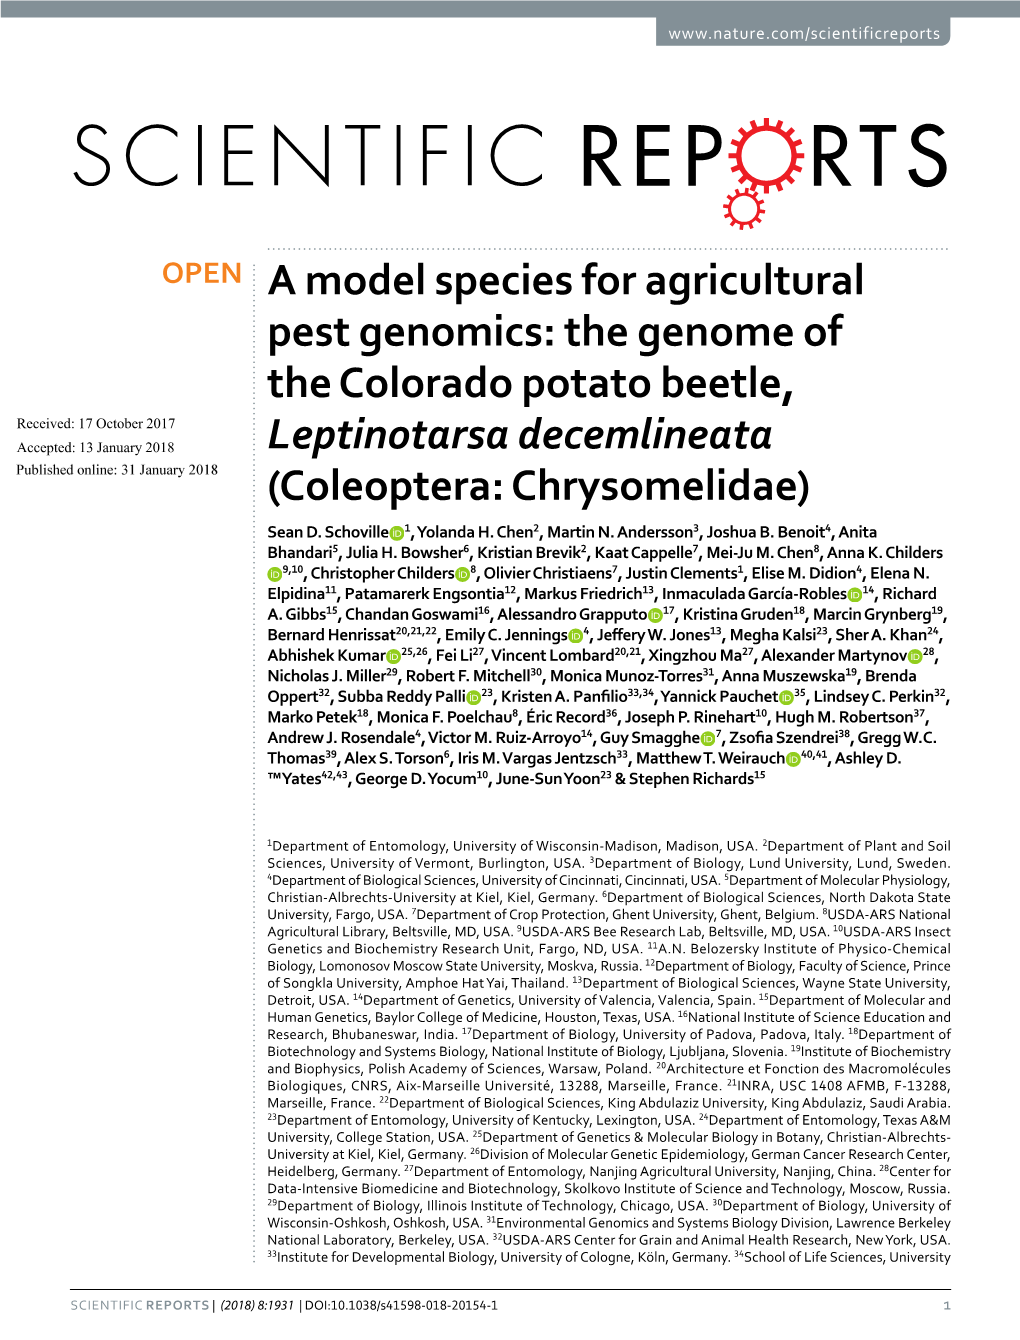 The Genome of the Colorado Potato Beetle, Leptinotarsa Decemlineata